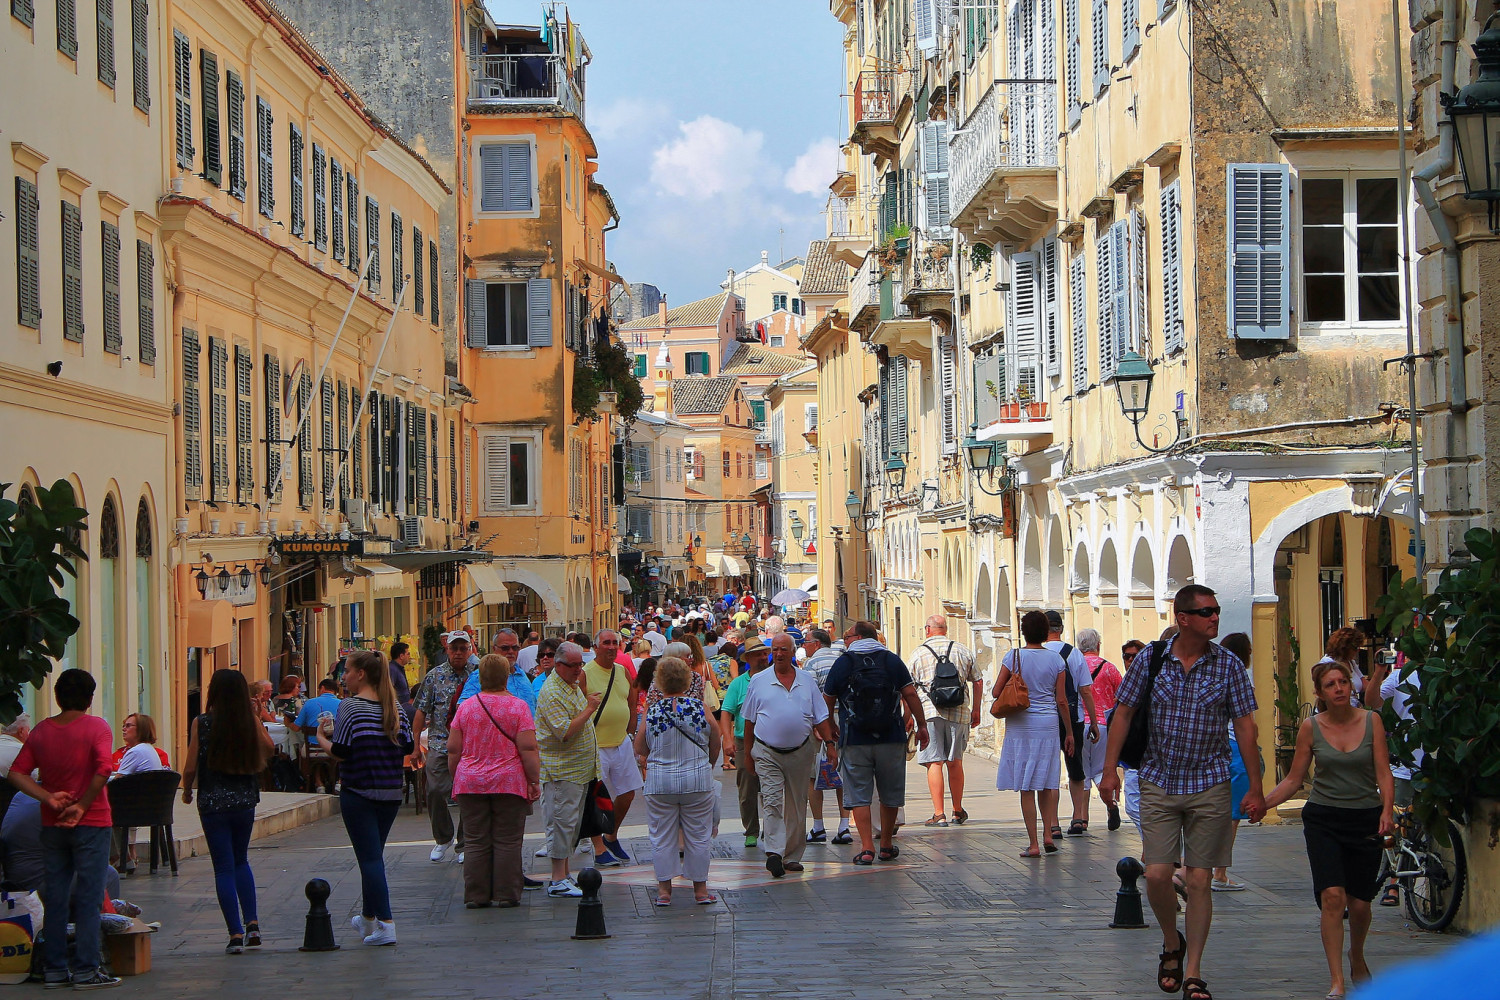 Corfu, Greece: Let’s Explore A Perfect Pedestrian Oasis